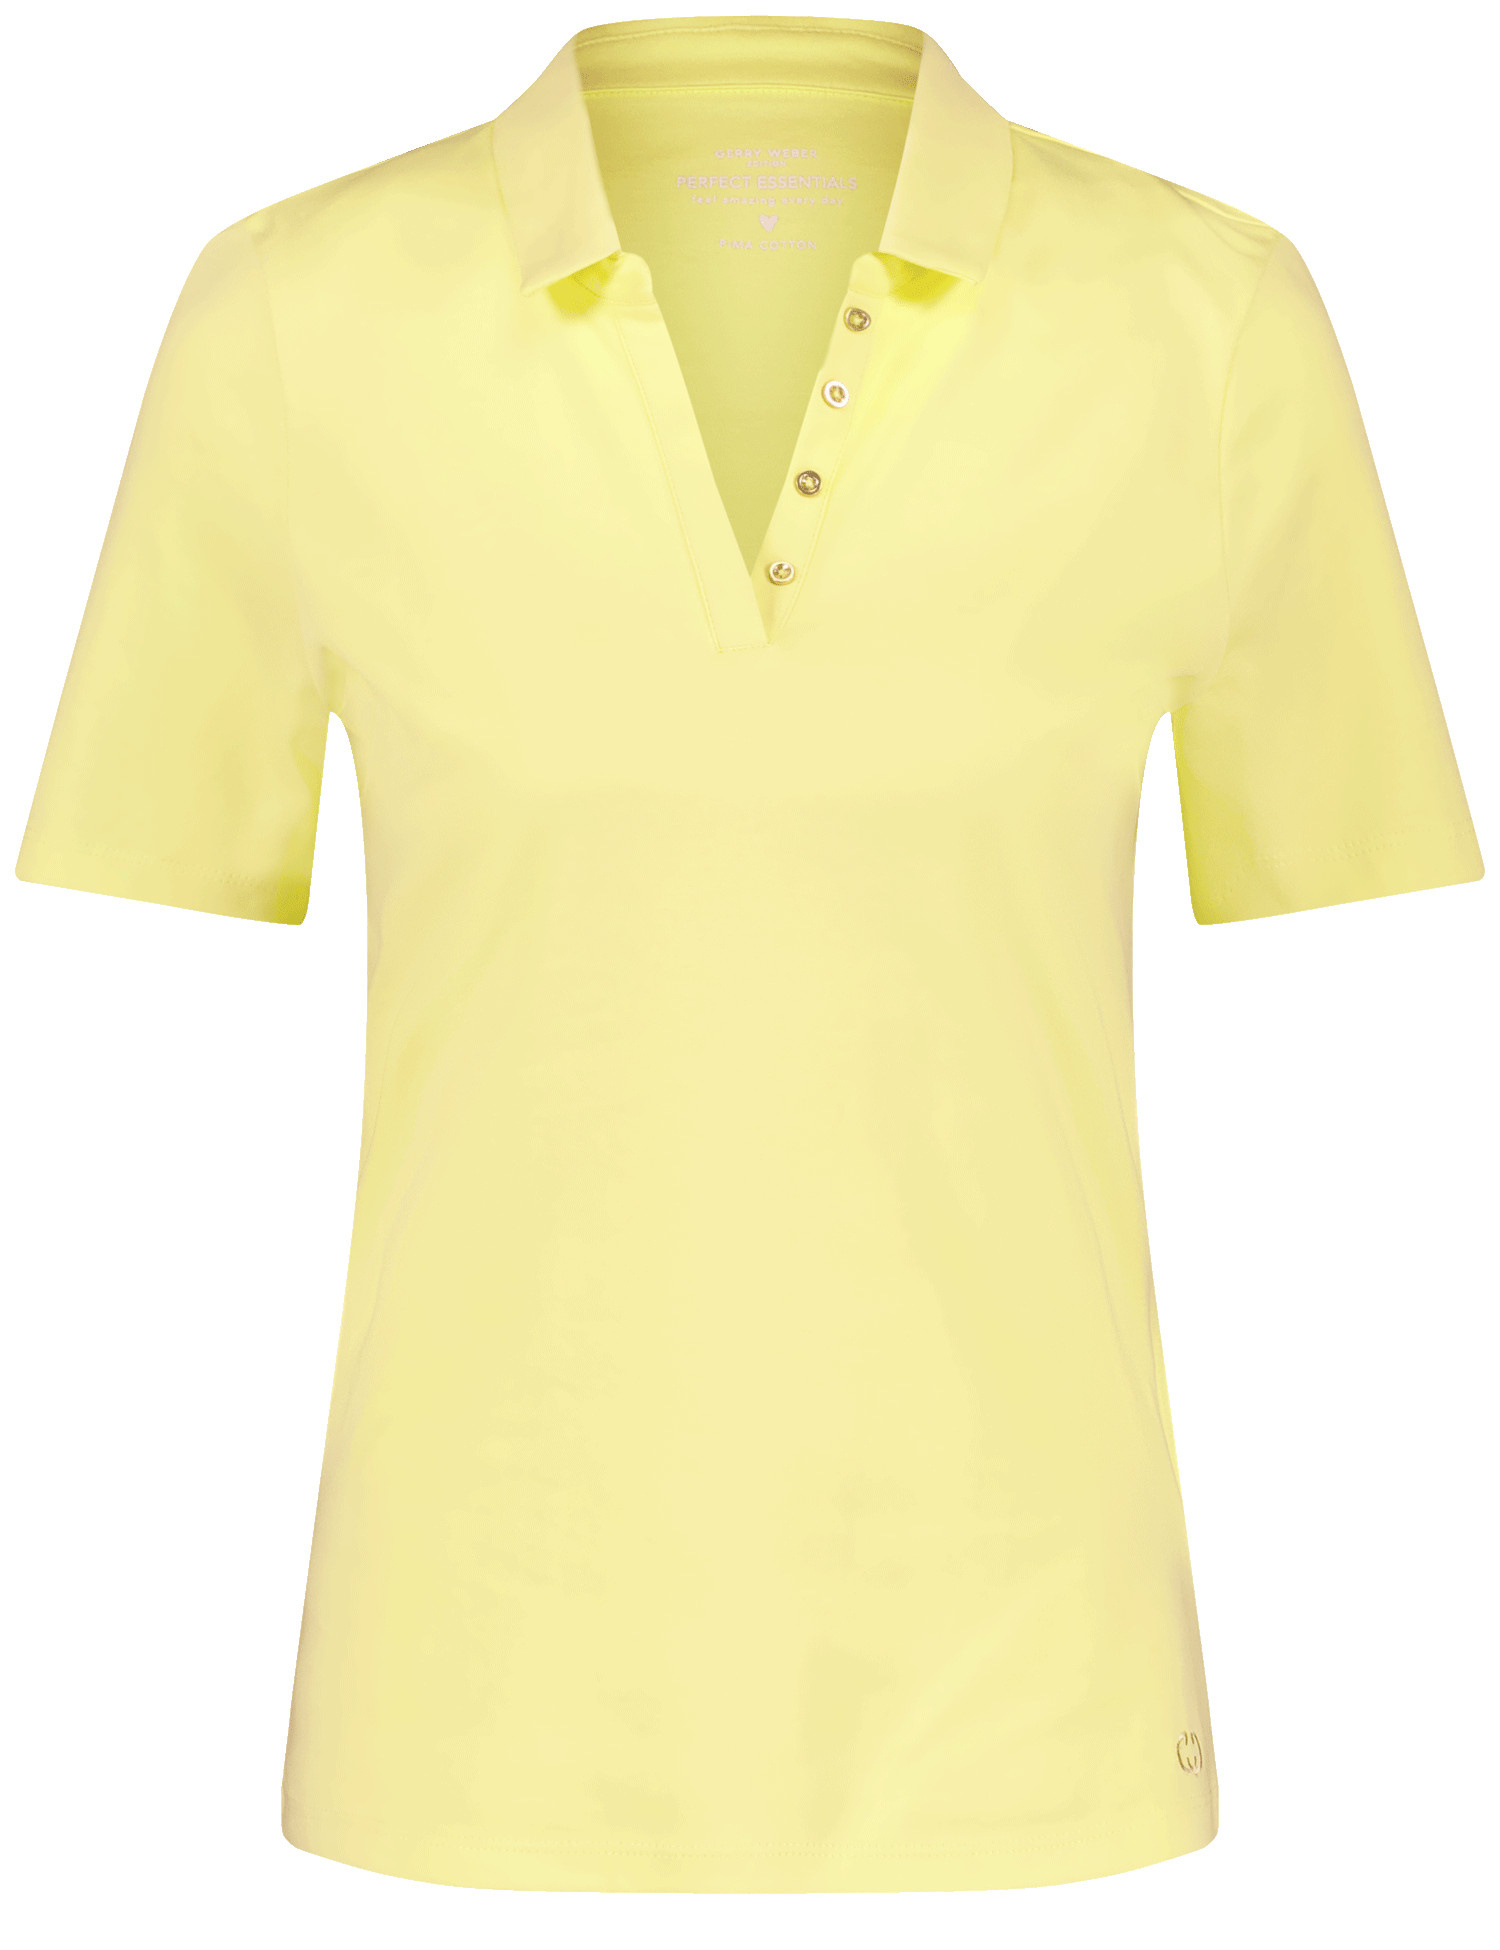 GERRY WEBER Damen Poloshirt aus Baumwolle 64cm Kurzarm Polokragen Gelb, 46 von Gerry Weber